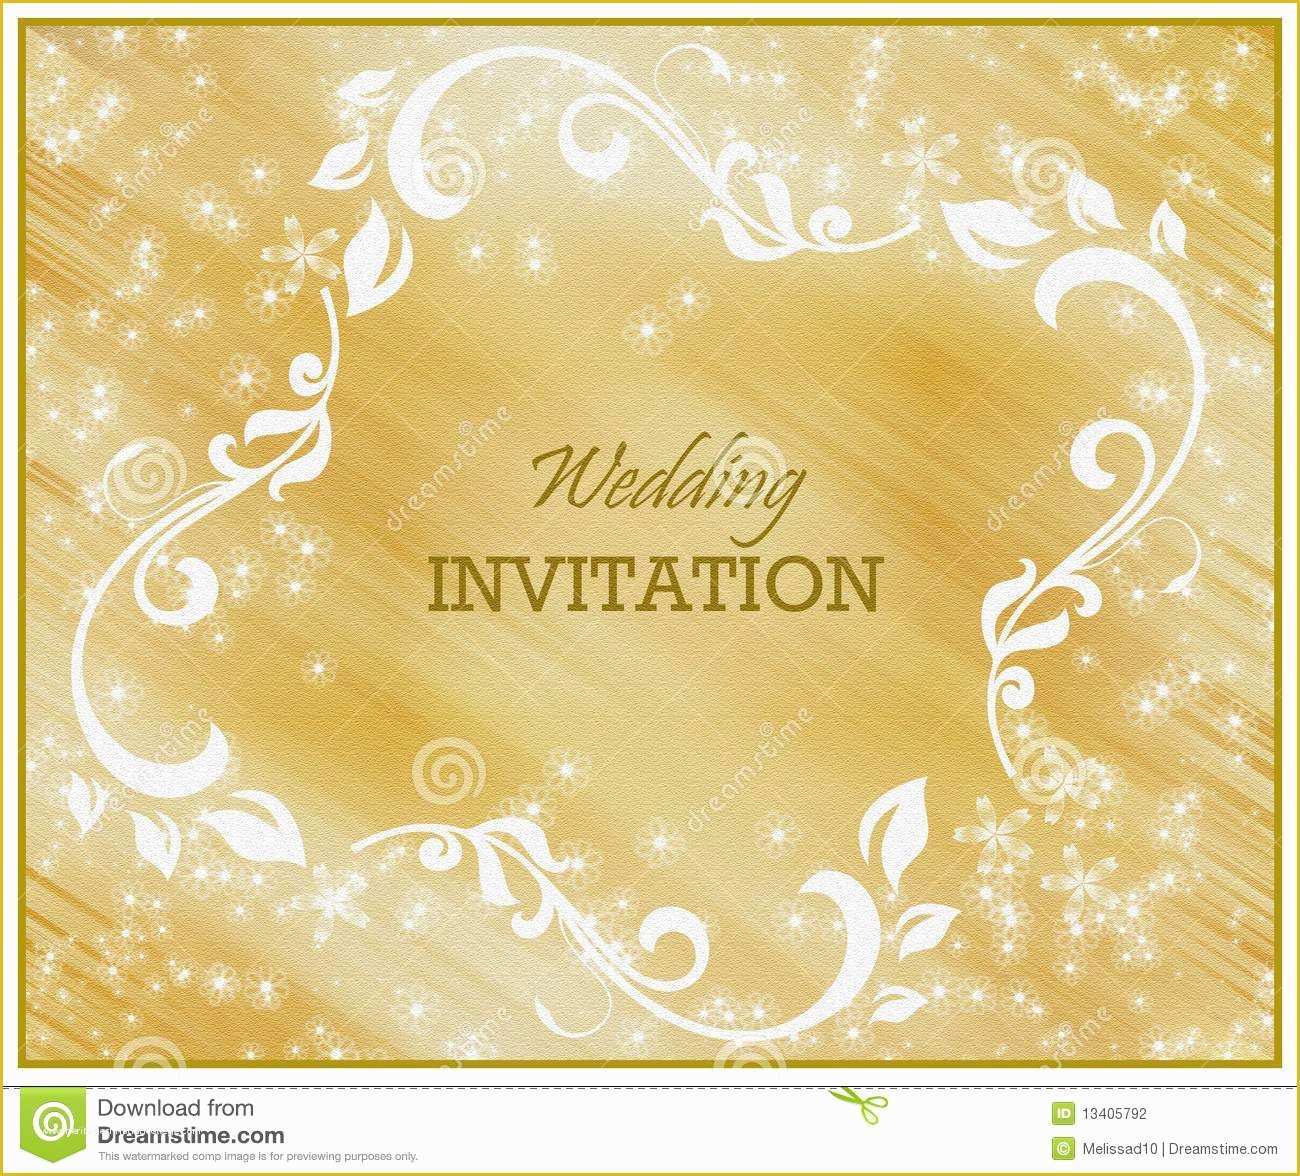 Editable Hindu Wedding Invitation Cards Templates Free Download Of Line Editable Hindu Wedding Invitation Cards Free Downl